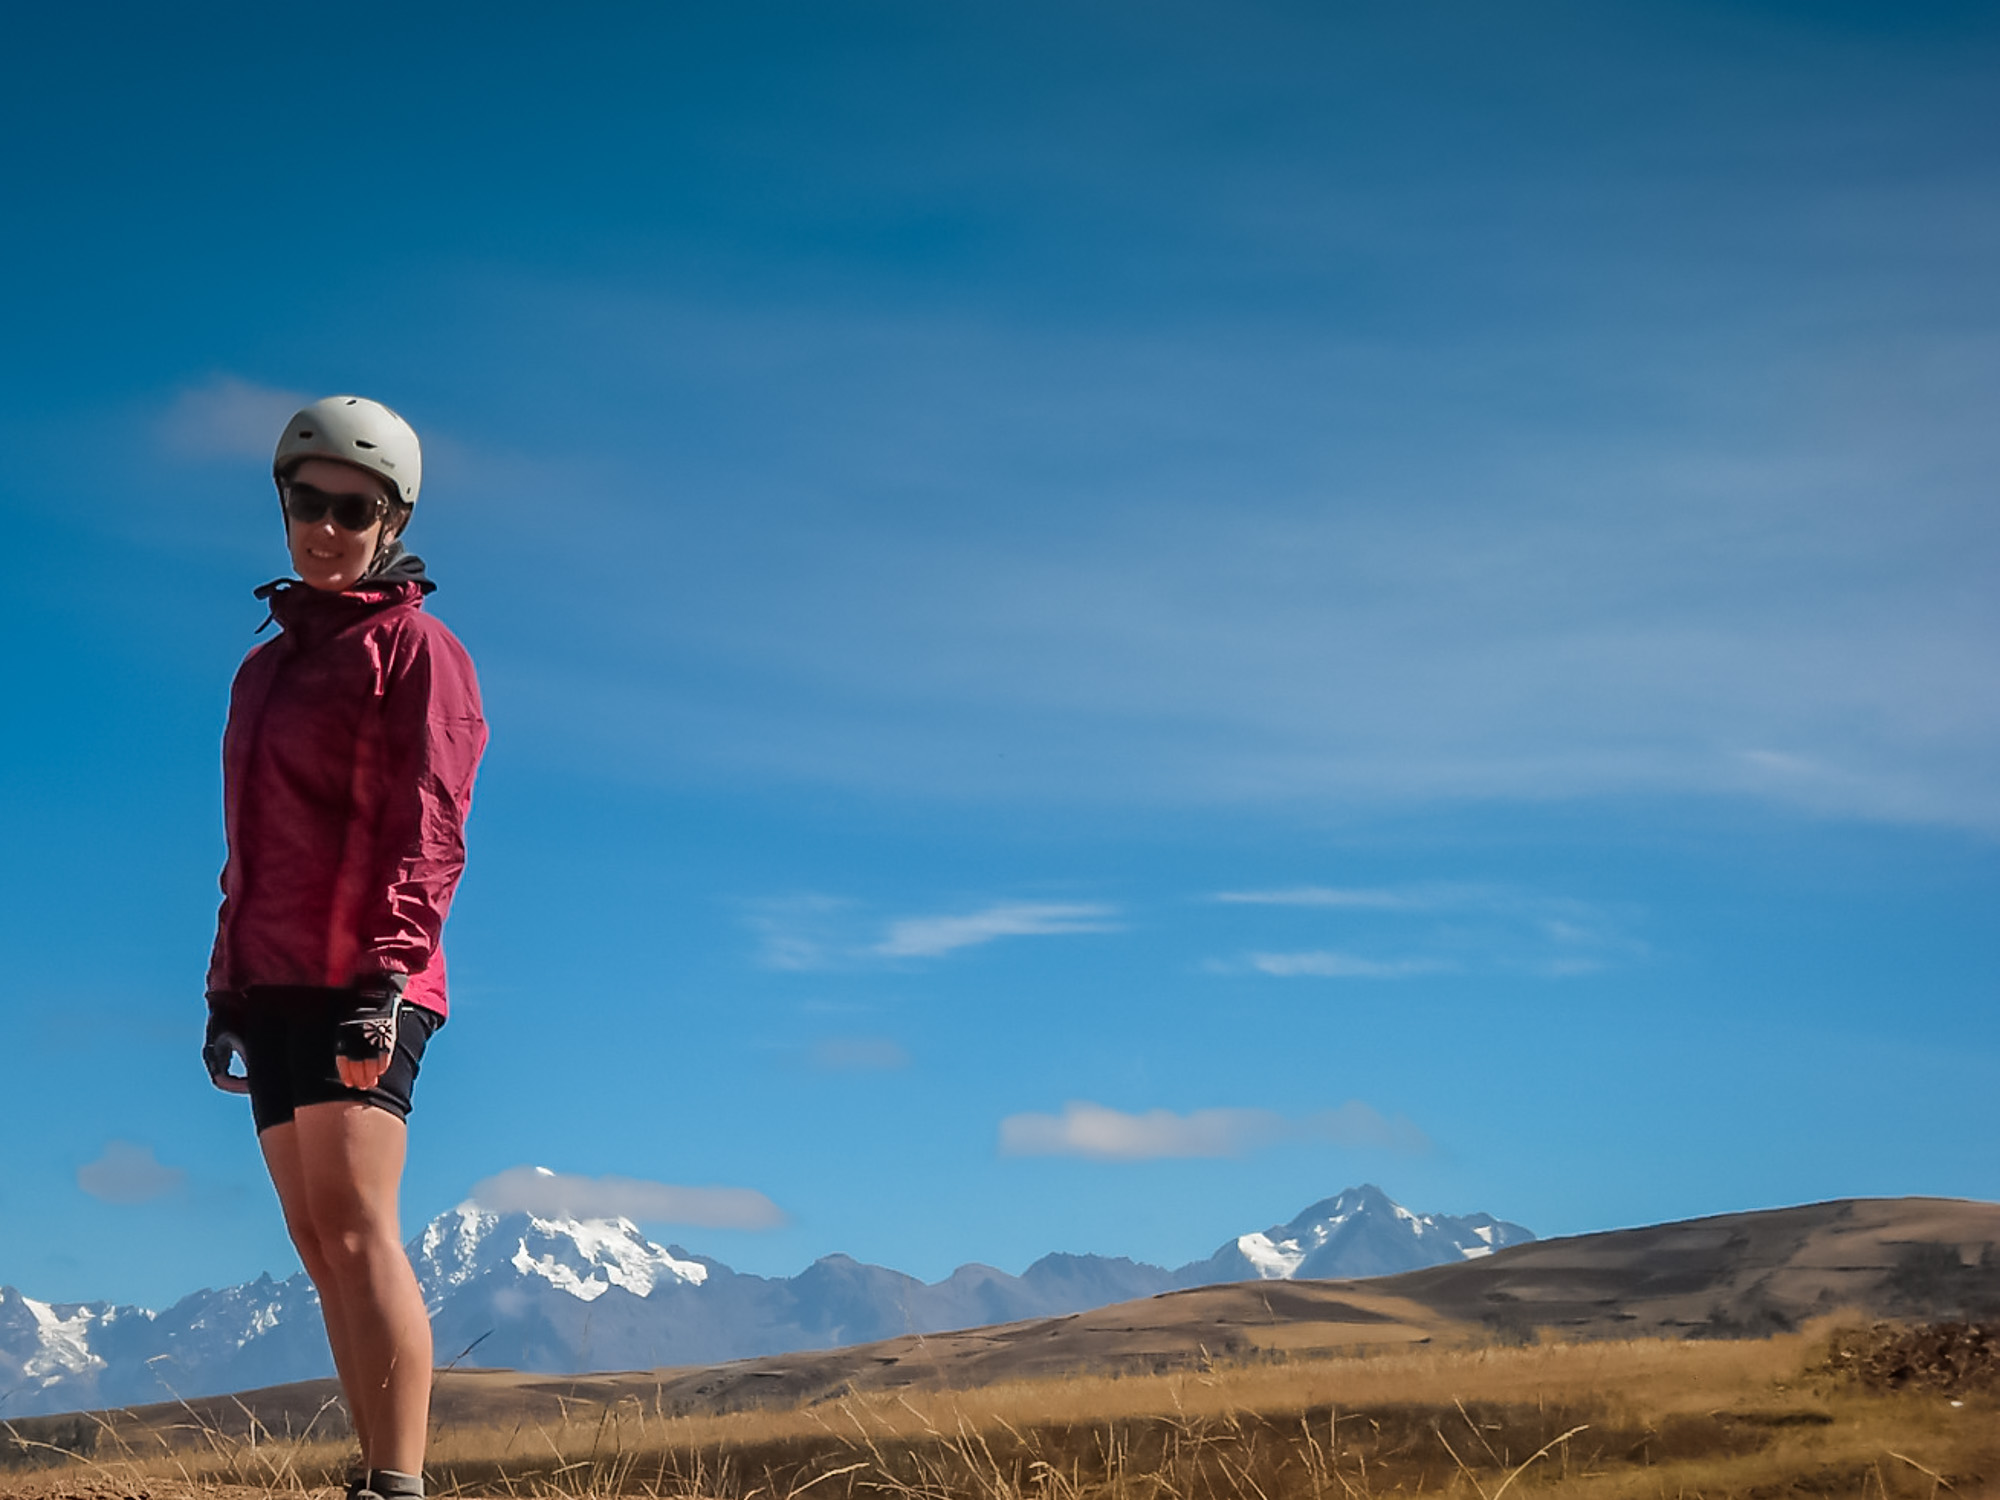 Peru guided tour guest in bike helmet in high mountain scenery